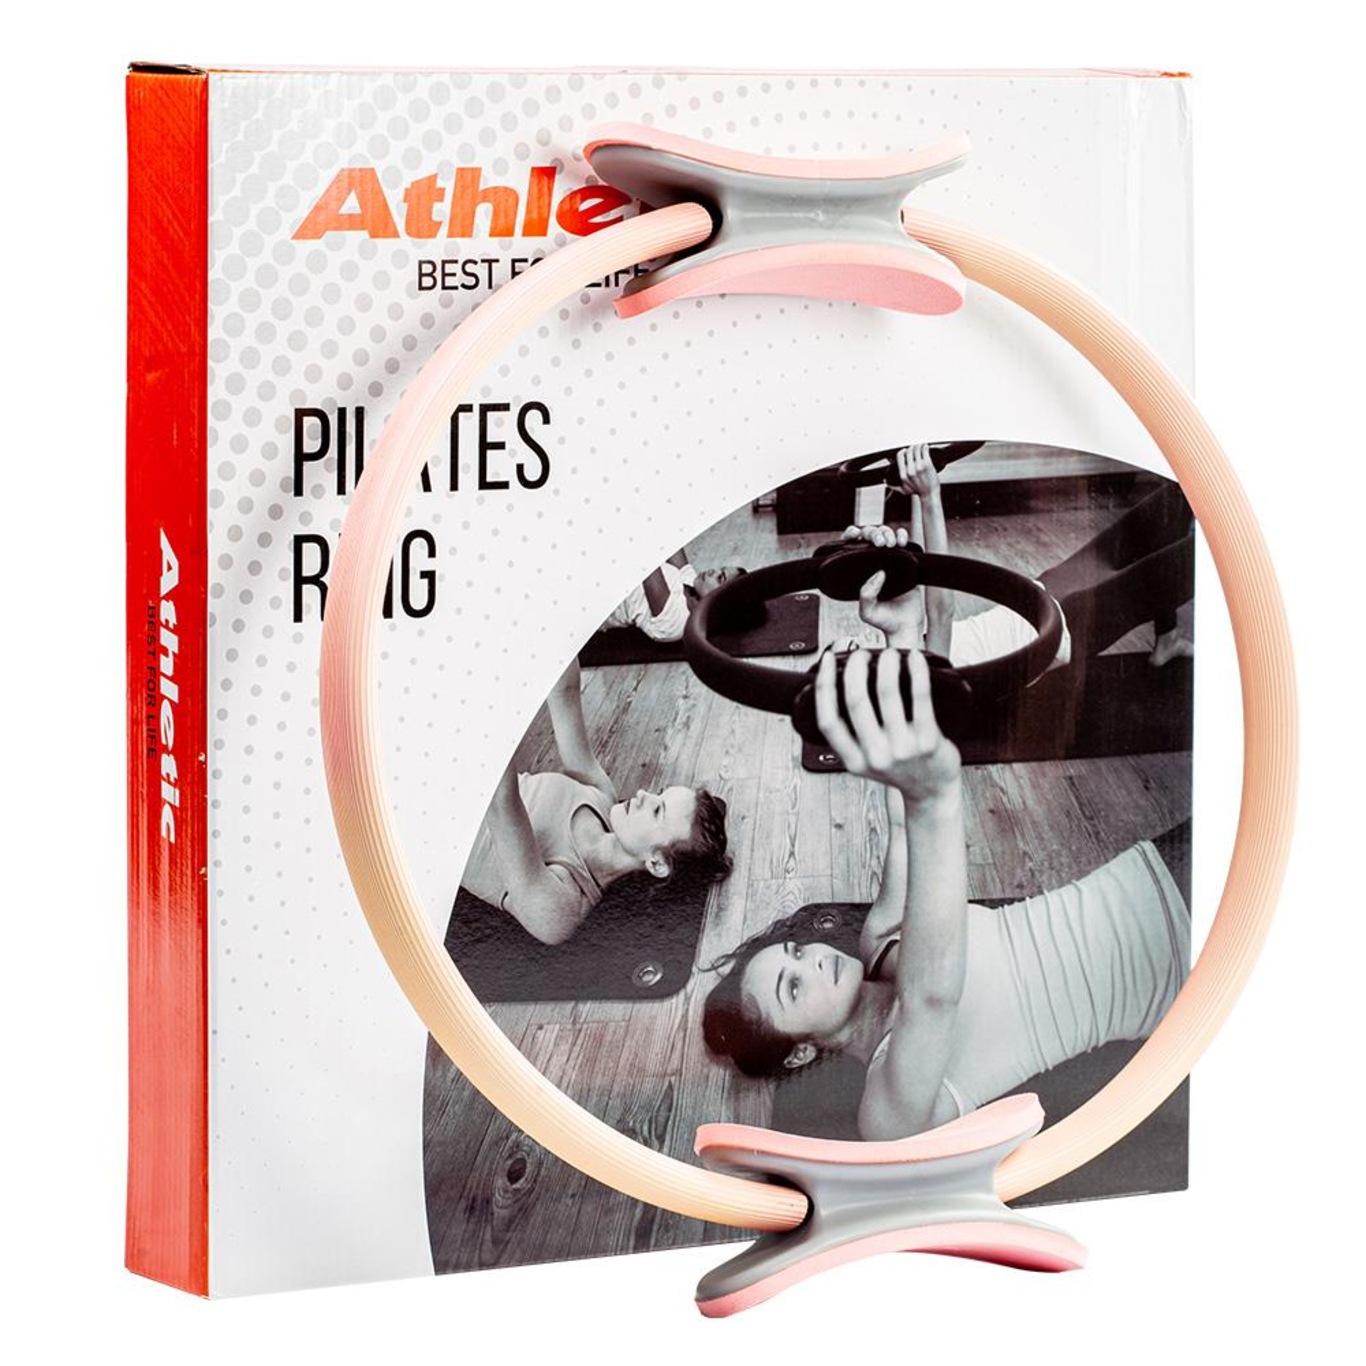 Kit de Pilates Athletic com Anel de Pilates - 38cm + Bola de